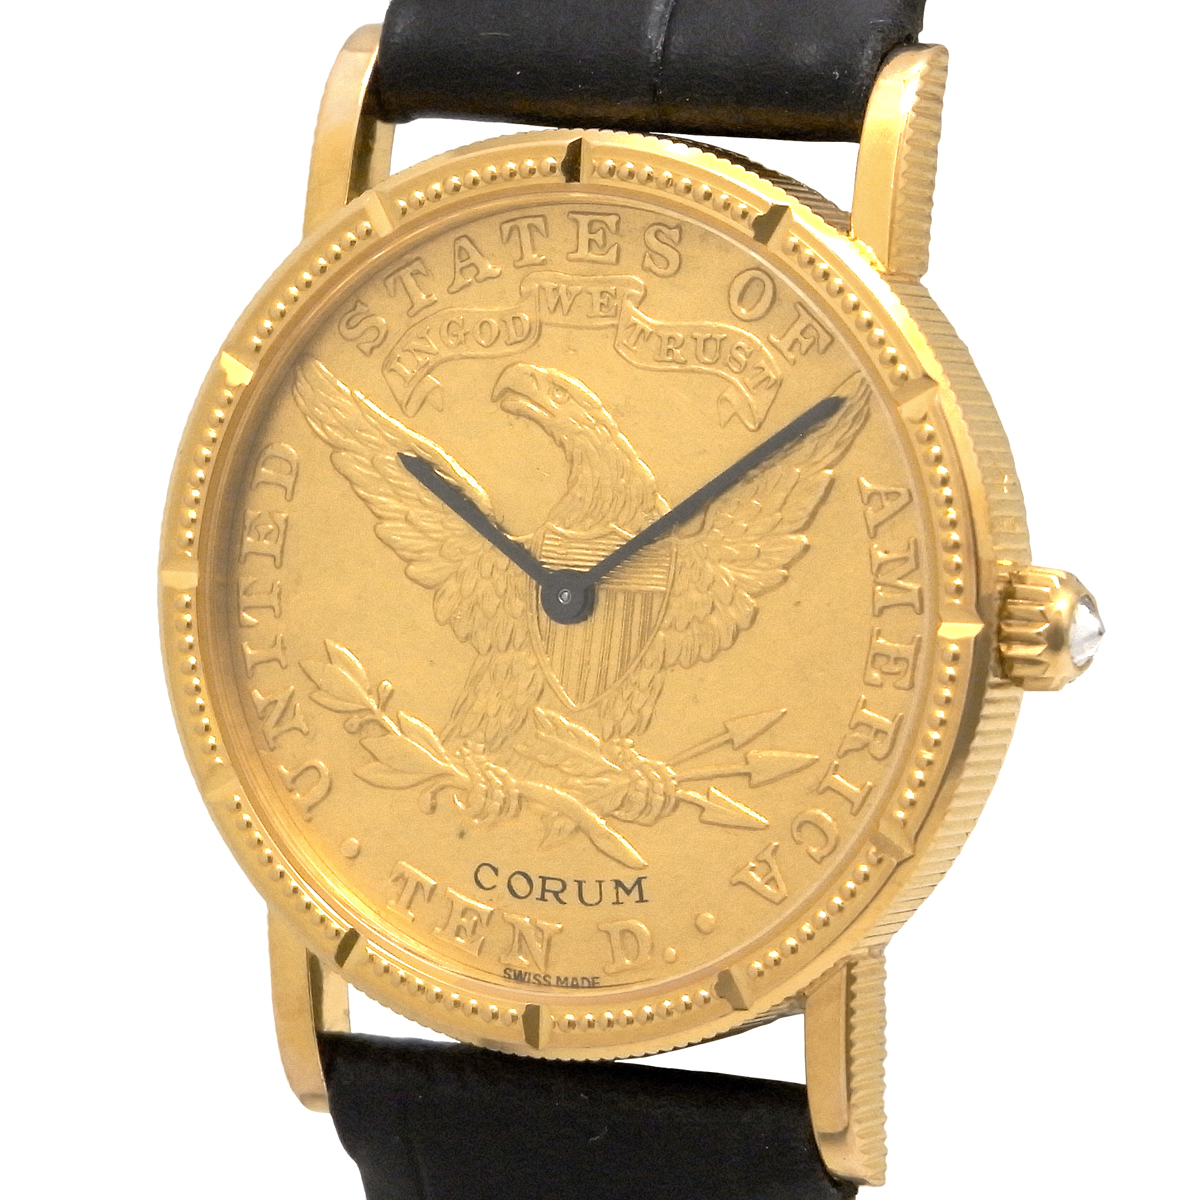  Corum coin watch 10 dollar $10 hand winding K18YG 750 18K Gold face men's boys size CORUM